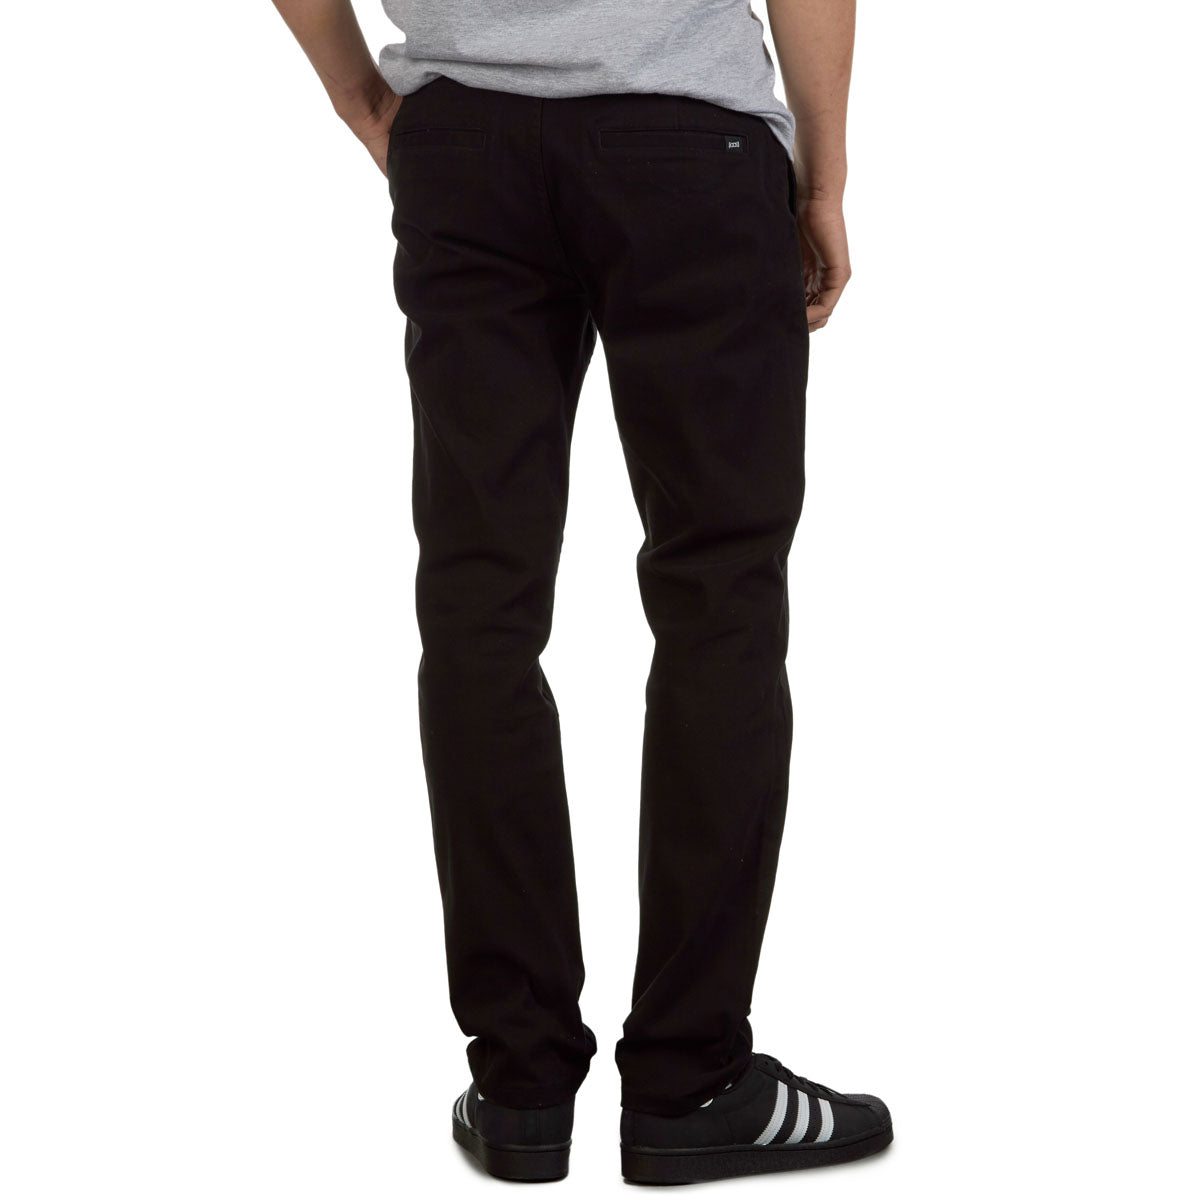 CCS Standard Plus Straight Chino Pants - Black image 3